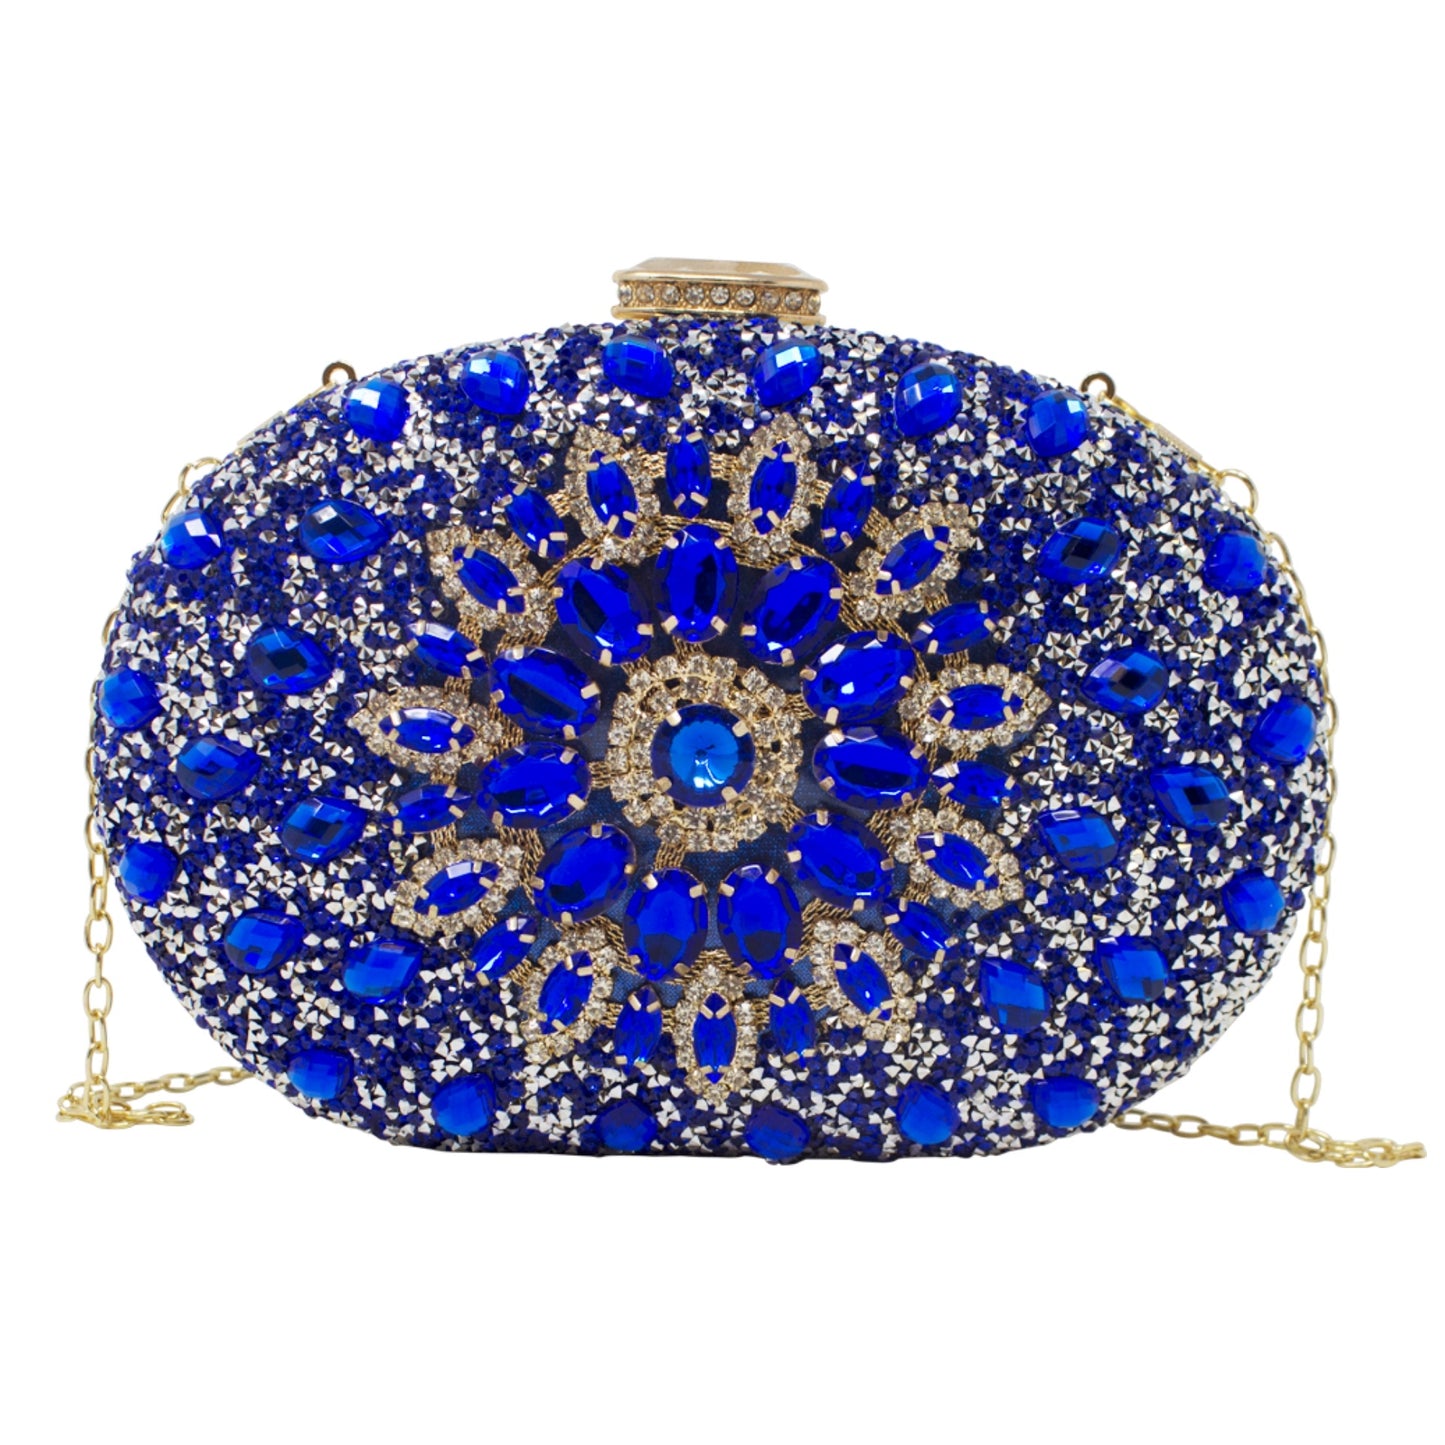 Sparkly Royal Blue Gold Diamante Encrusted Clutch Bag